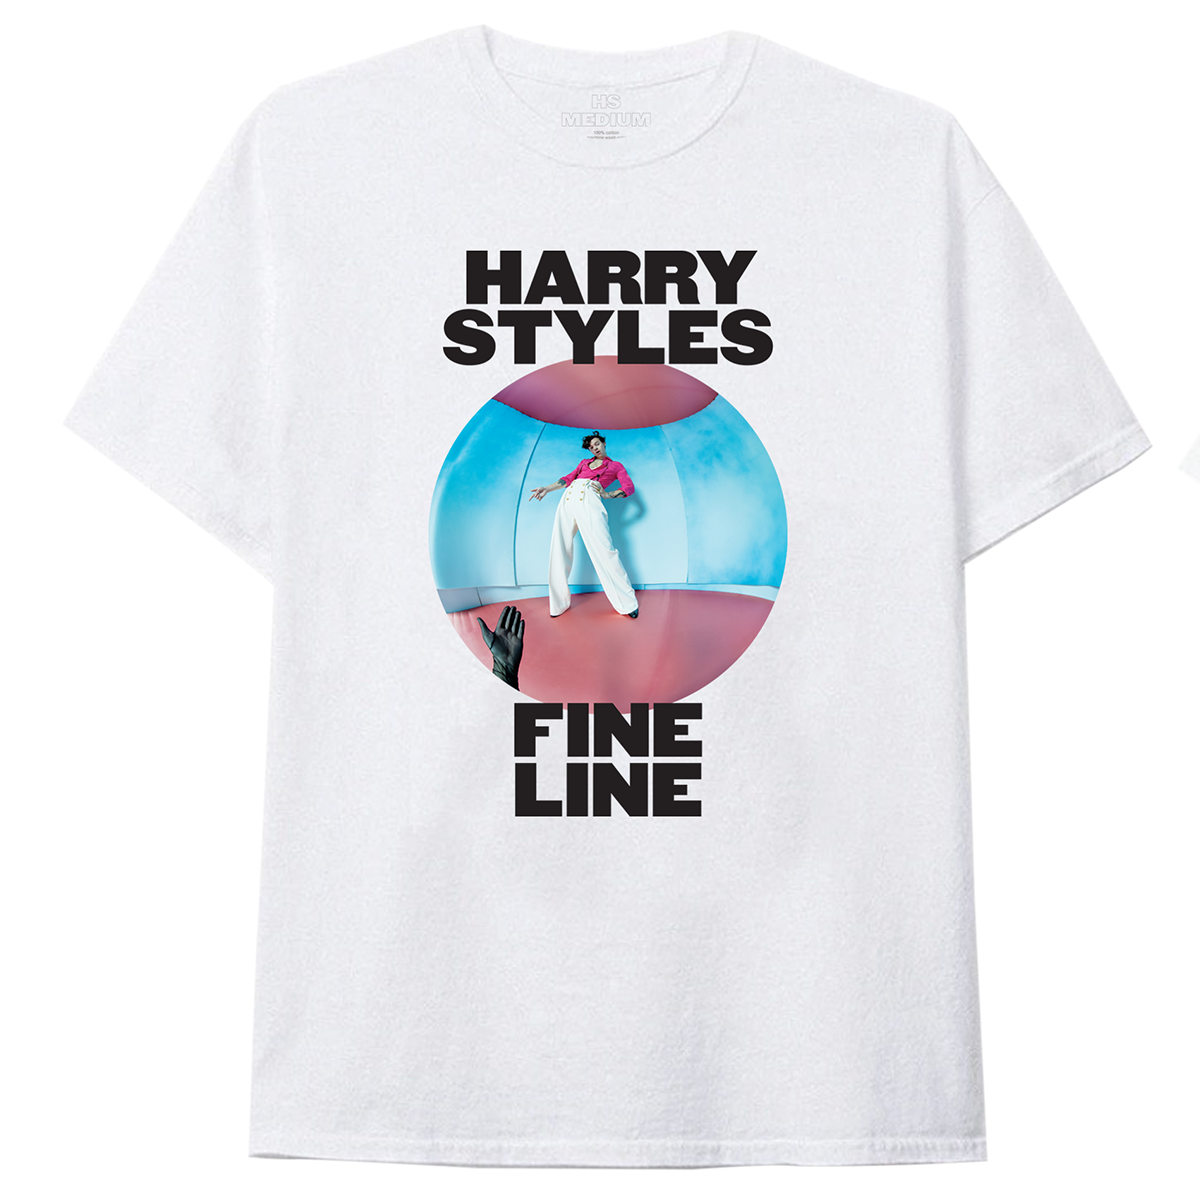 HARRY STYLES FINE LINE WHITE TEE